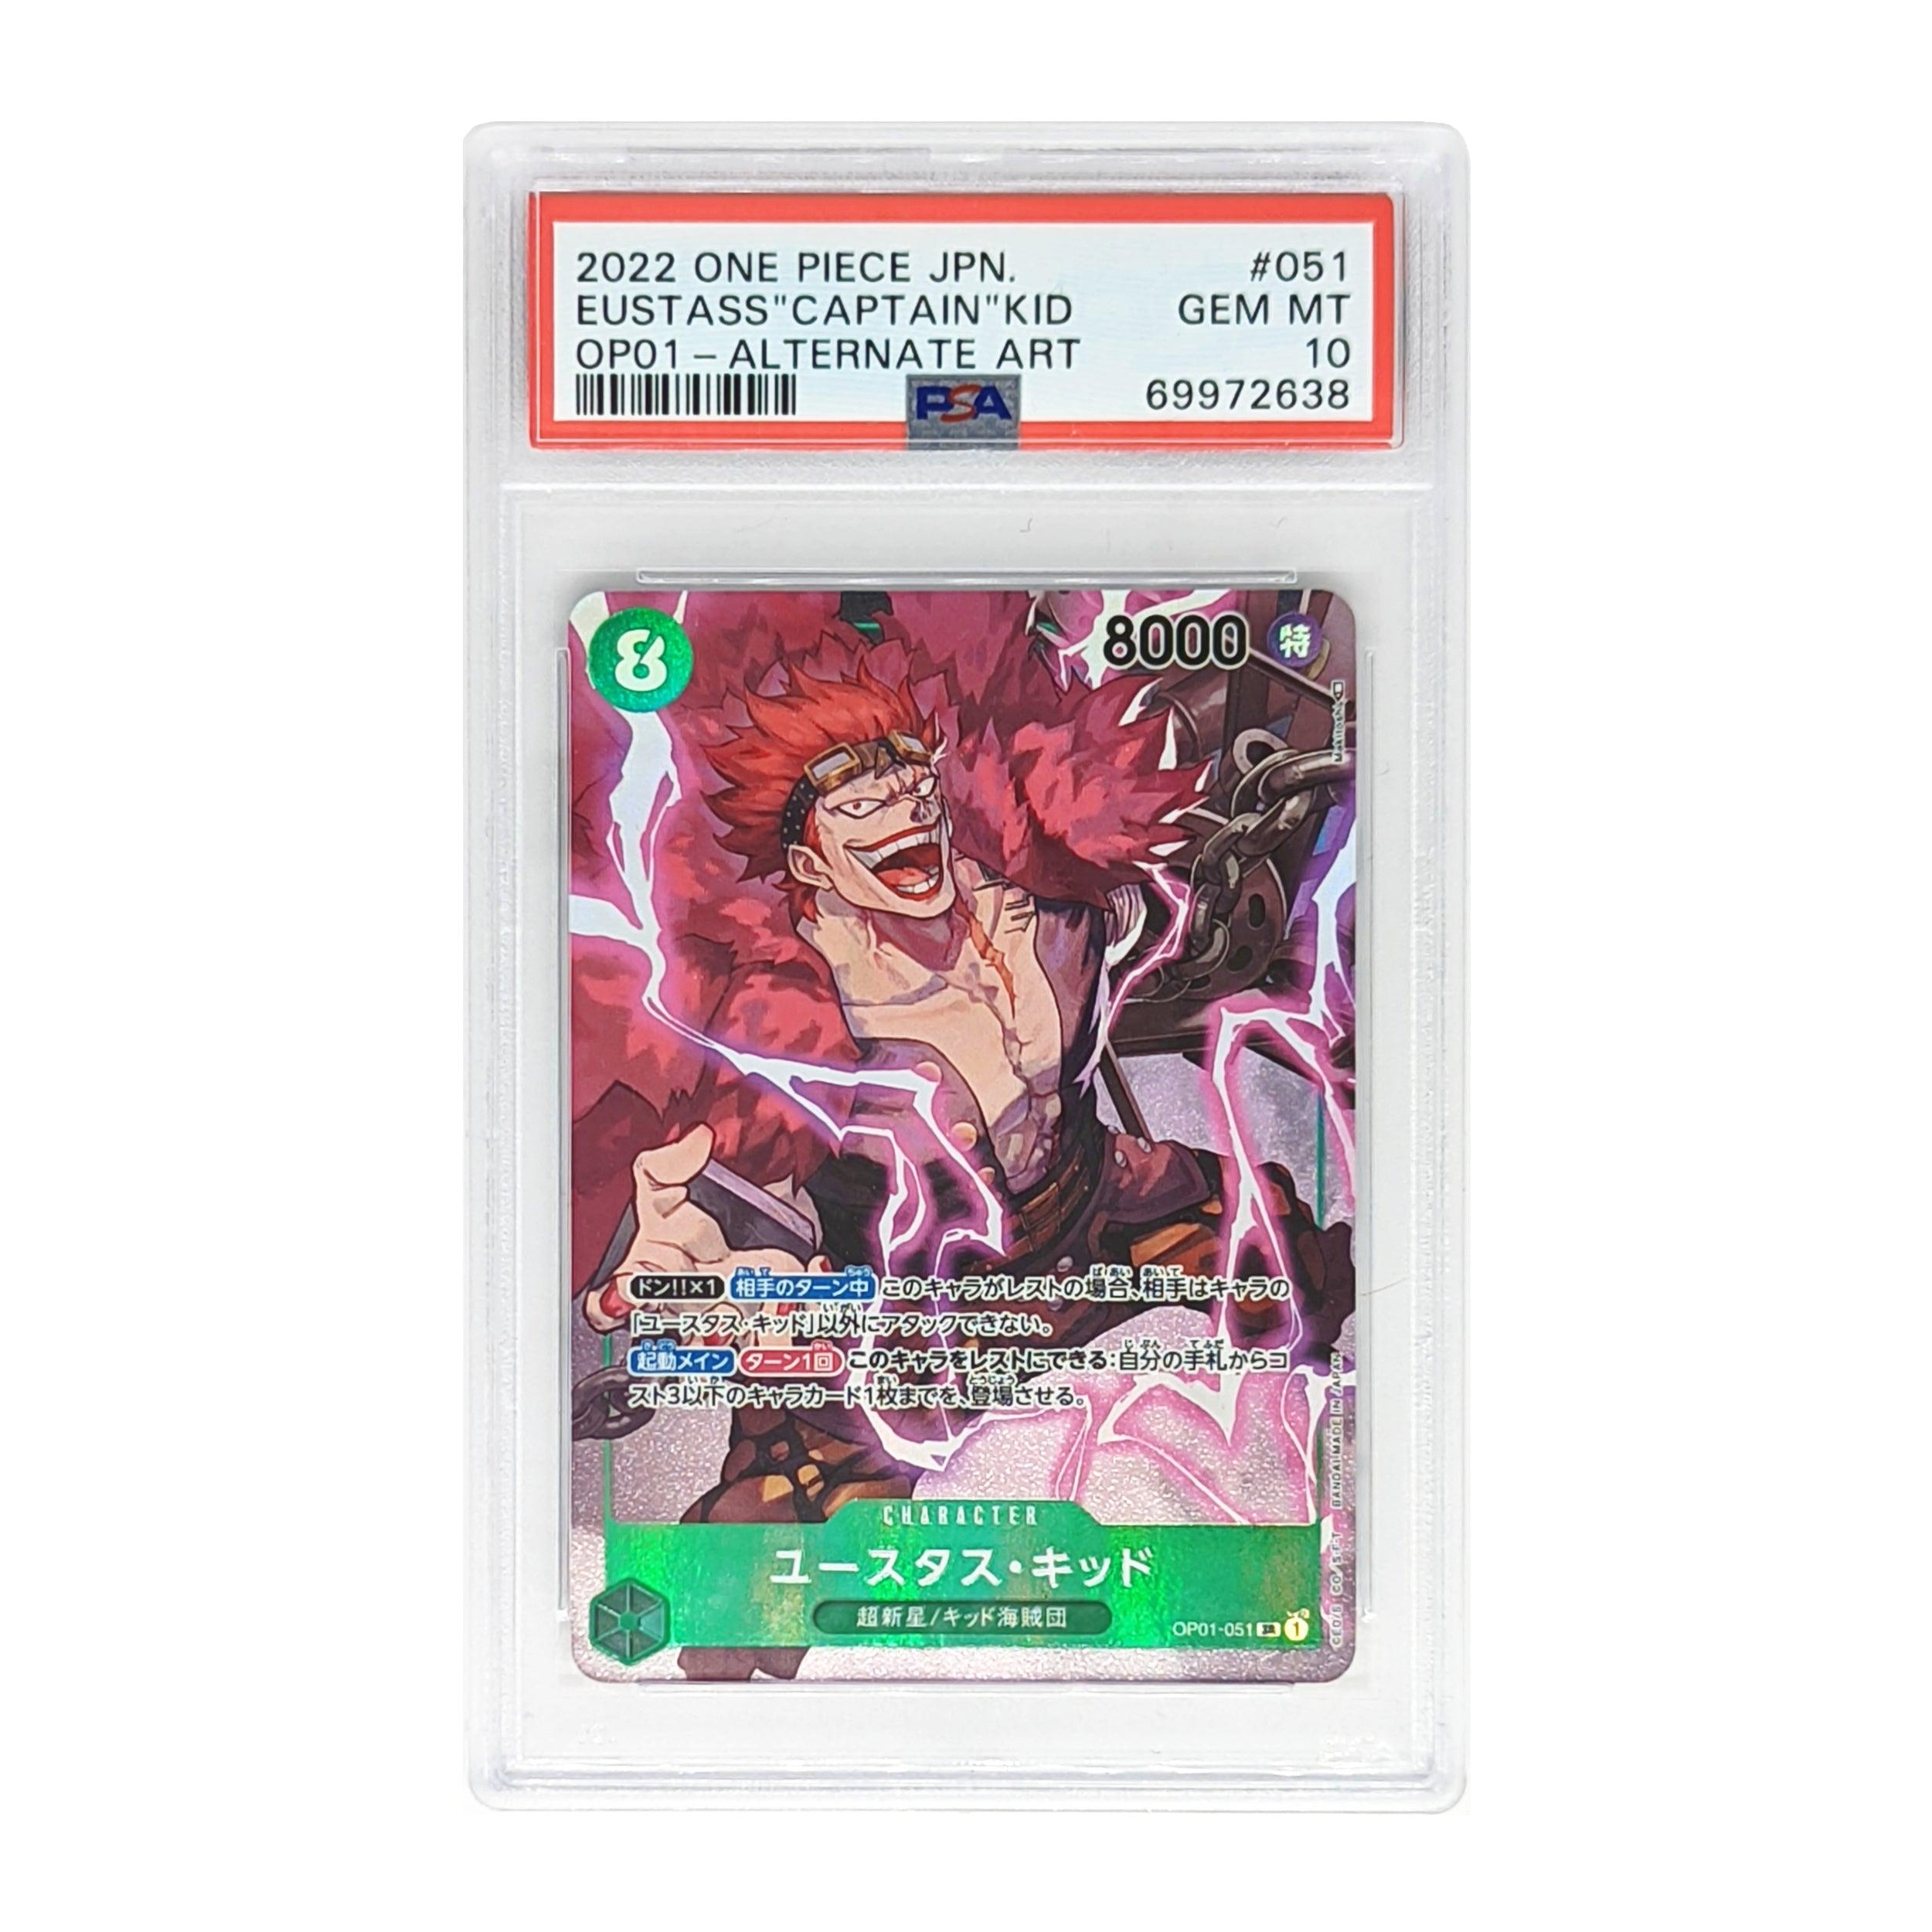 PSA 10 One Piece Card Game - OP01#051- Eustass Capitain Kid - Alternate Art - Japanese Version - Shopper